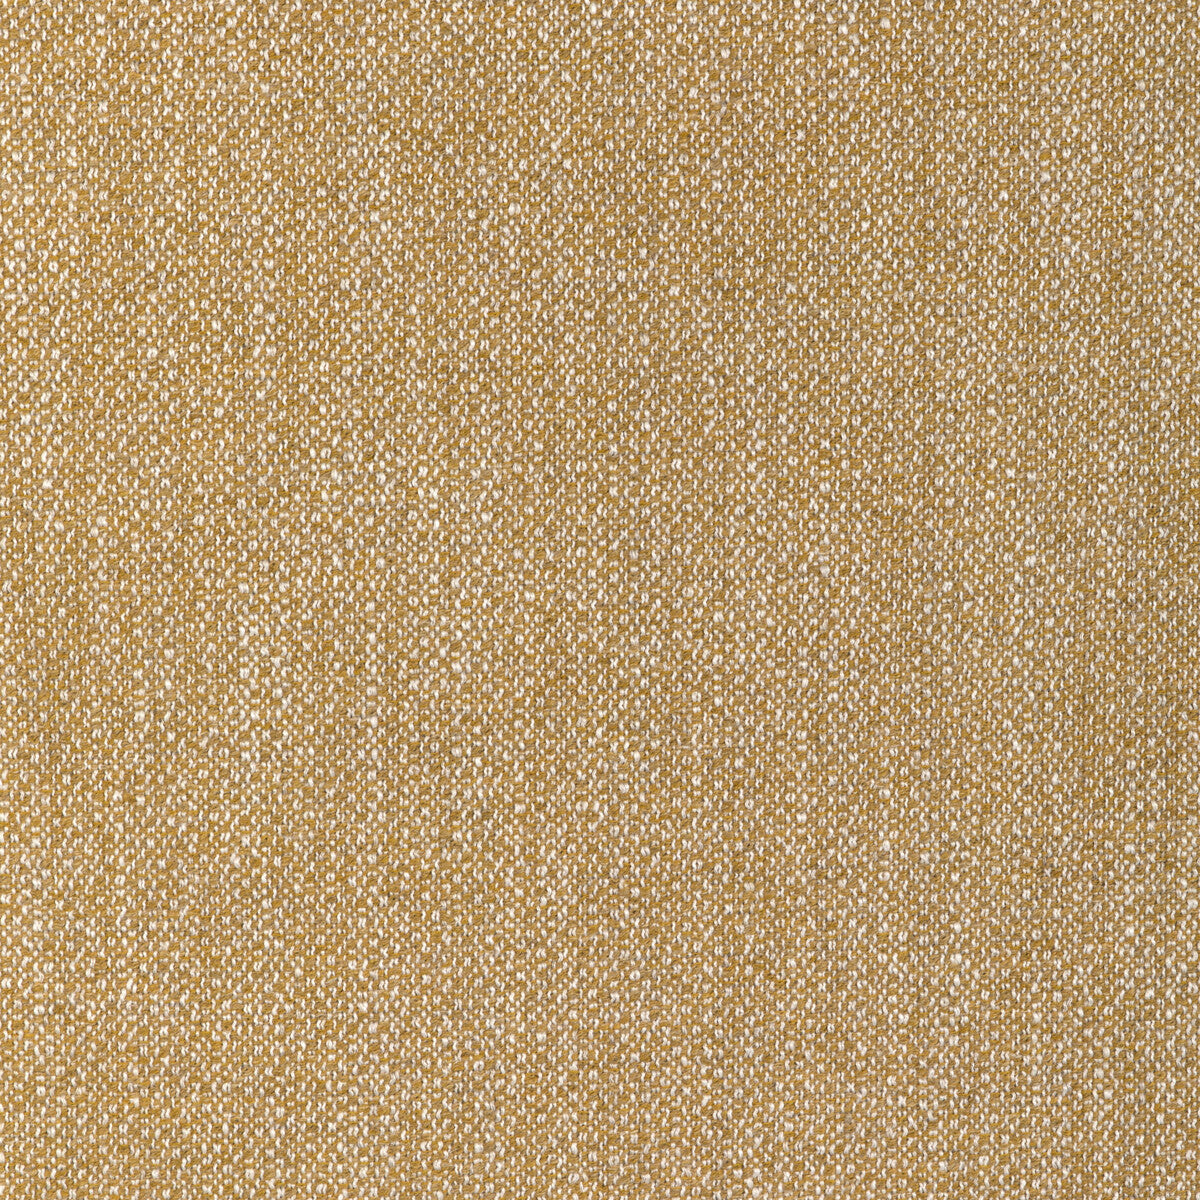 Torus fabric in glow color - pattern GWF-3793.416.0 - by Lee Jofa Modern in the Kelly Wearstler VIII collection